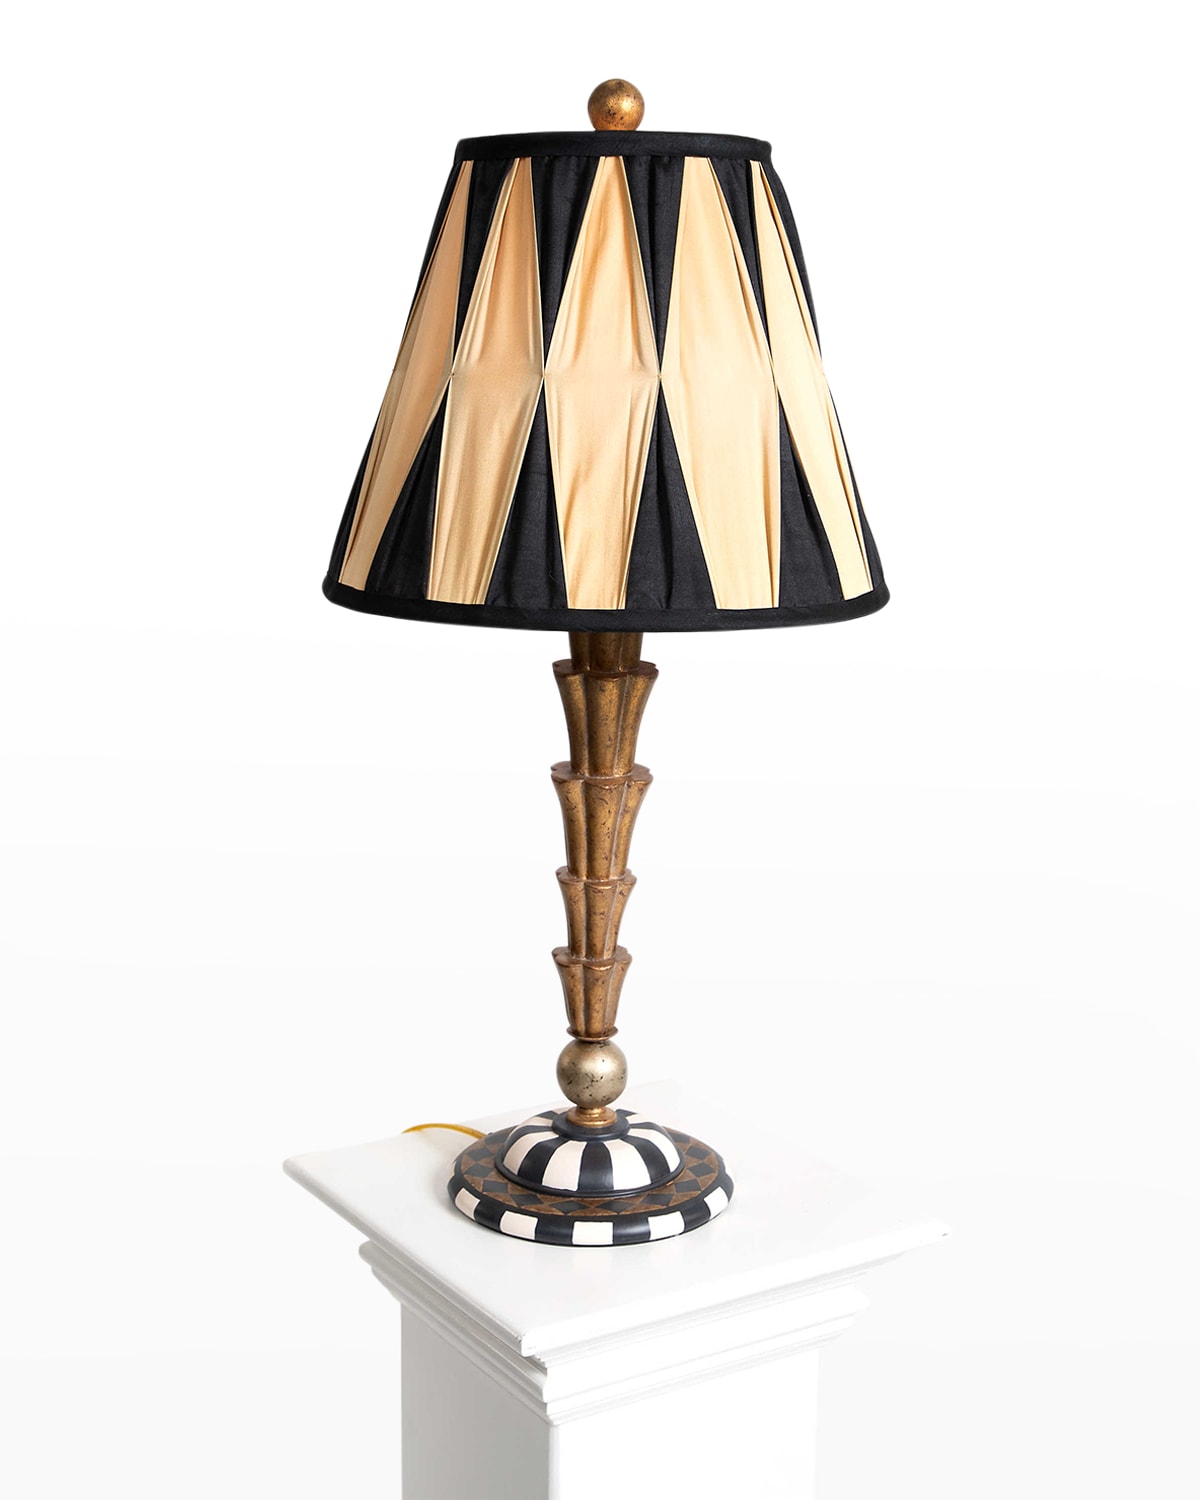 Mackenzie-childs Evenfall 33.5" Table Lamp